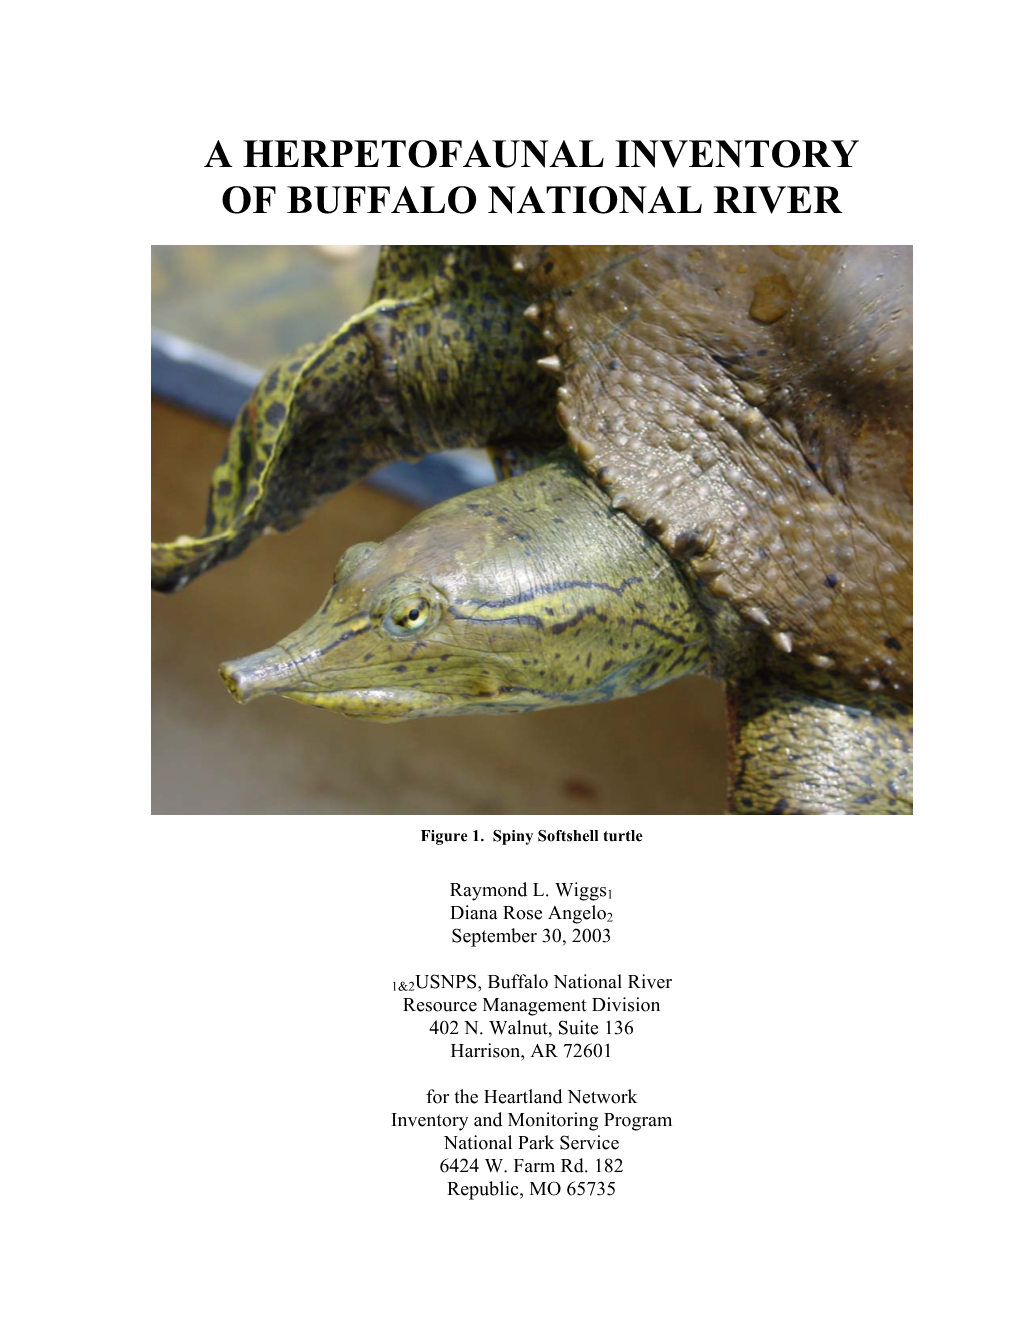 A Herpetofaunal Inventory of Buffalo National River